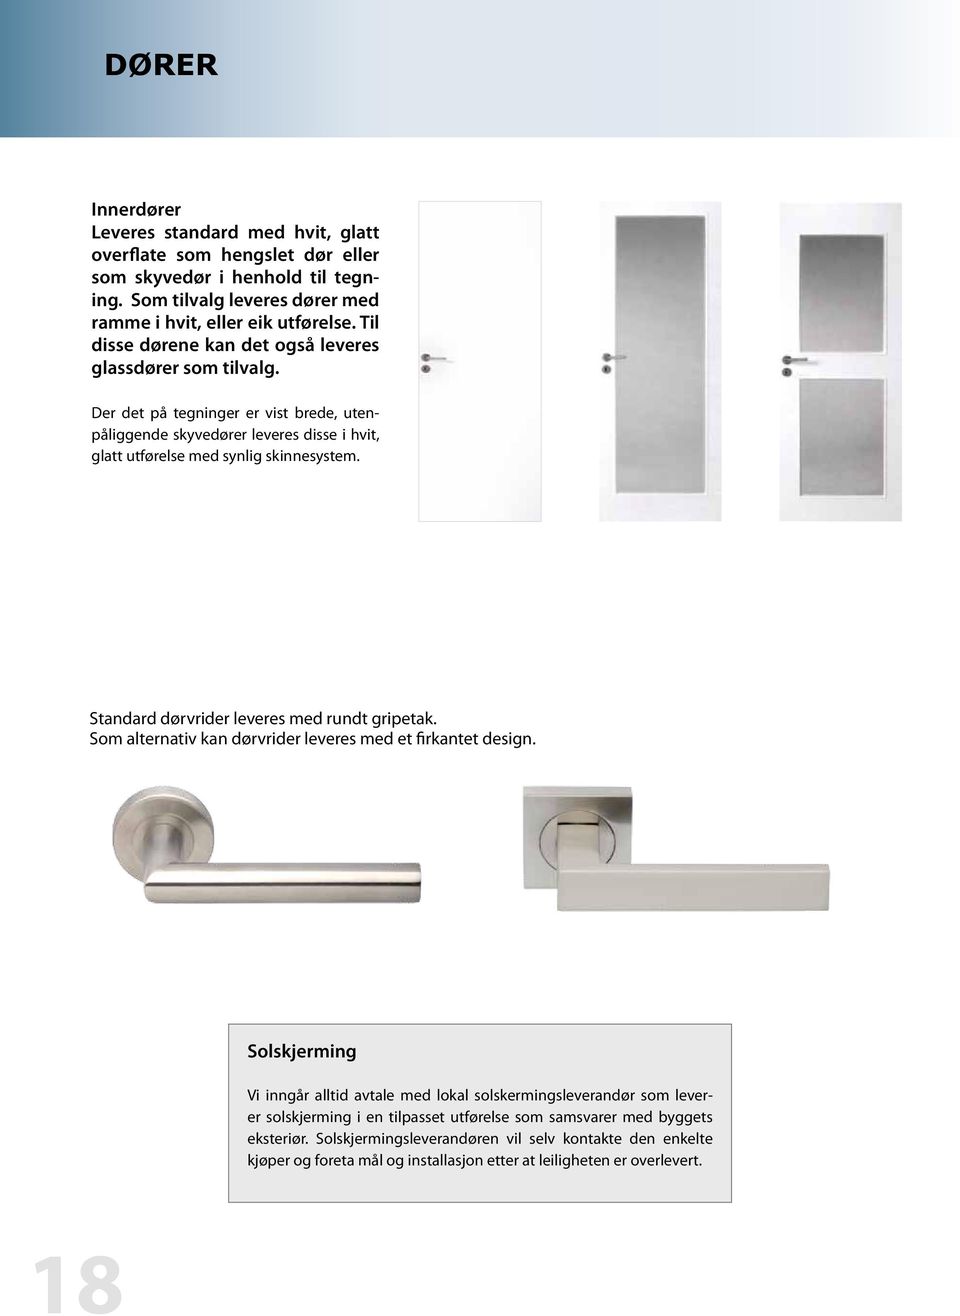 Standard dørvrider leveres med rundt gripetak. Som alternativ kan dørvrider leveres med et firkantet design.